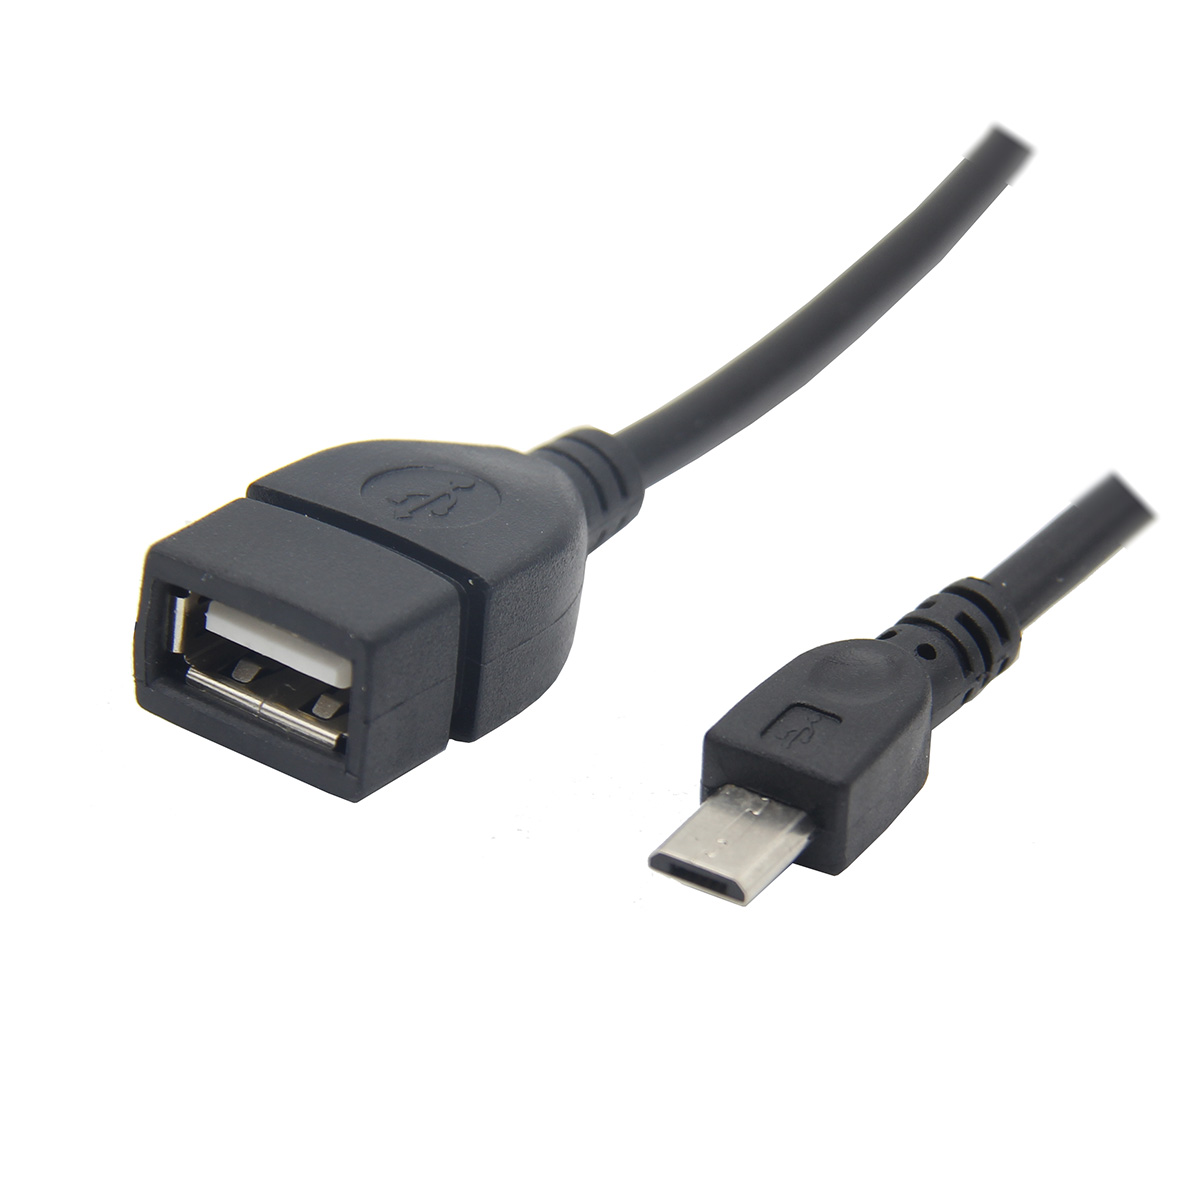 5-in-1 GPIO Cable + USB OTG Cable + Mini HDMI to HDMI Adapter + 2x20 Pin Header + Heat Sink Base Kit For Raspberry Pi Zero / Raspberry Pi Zero W. 13